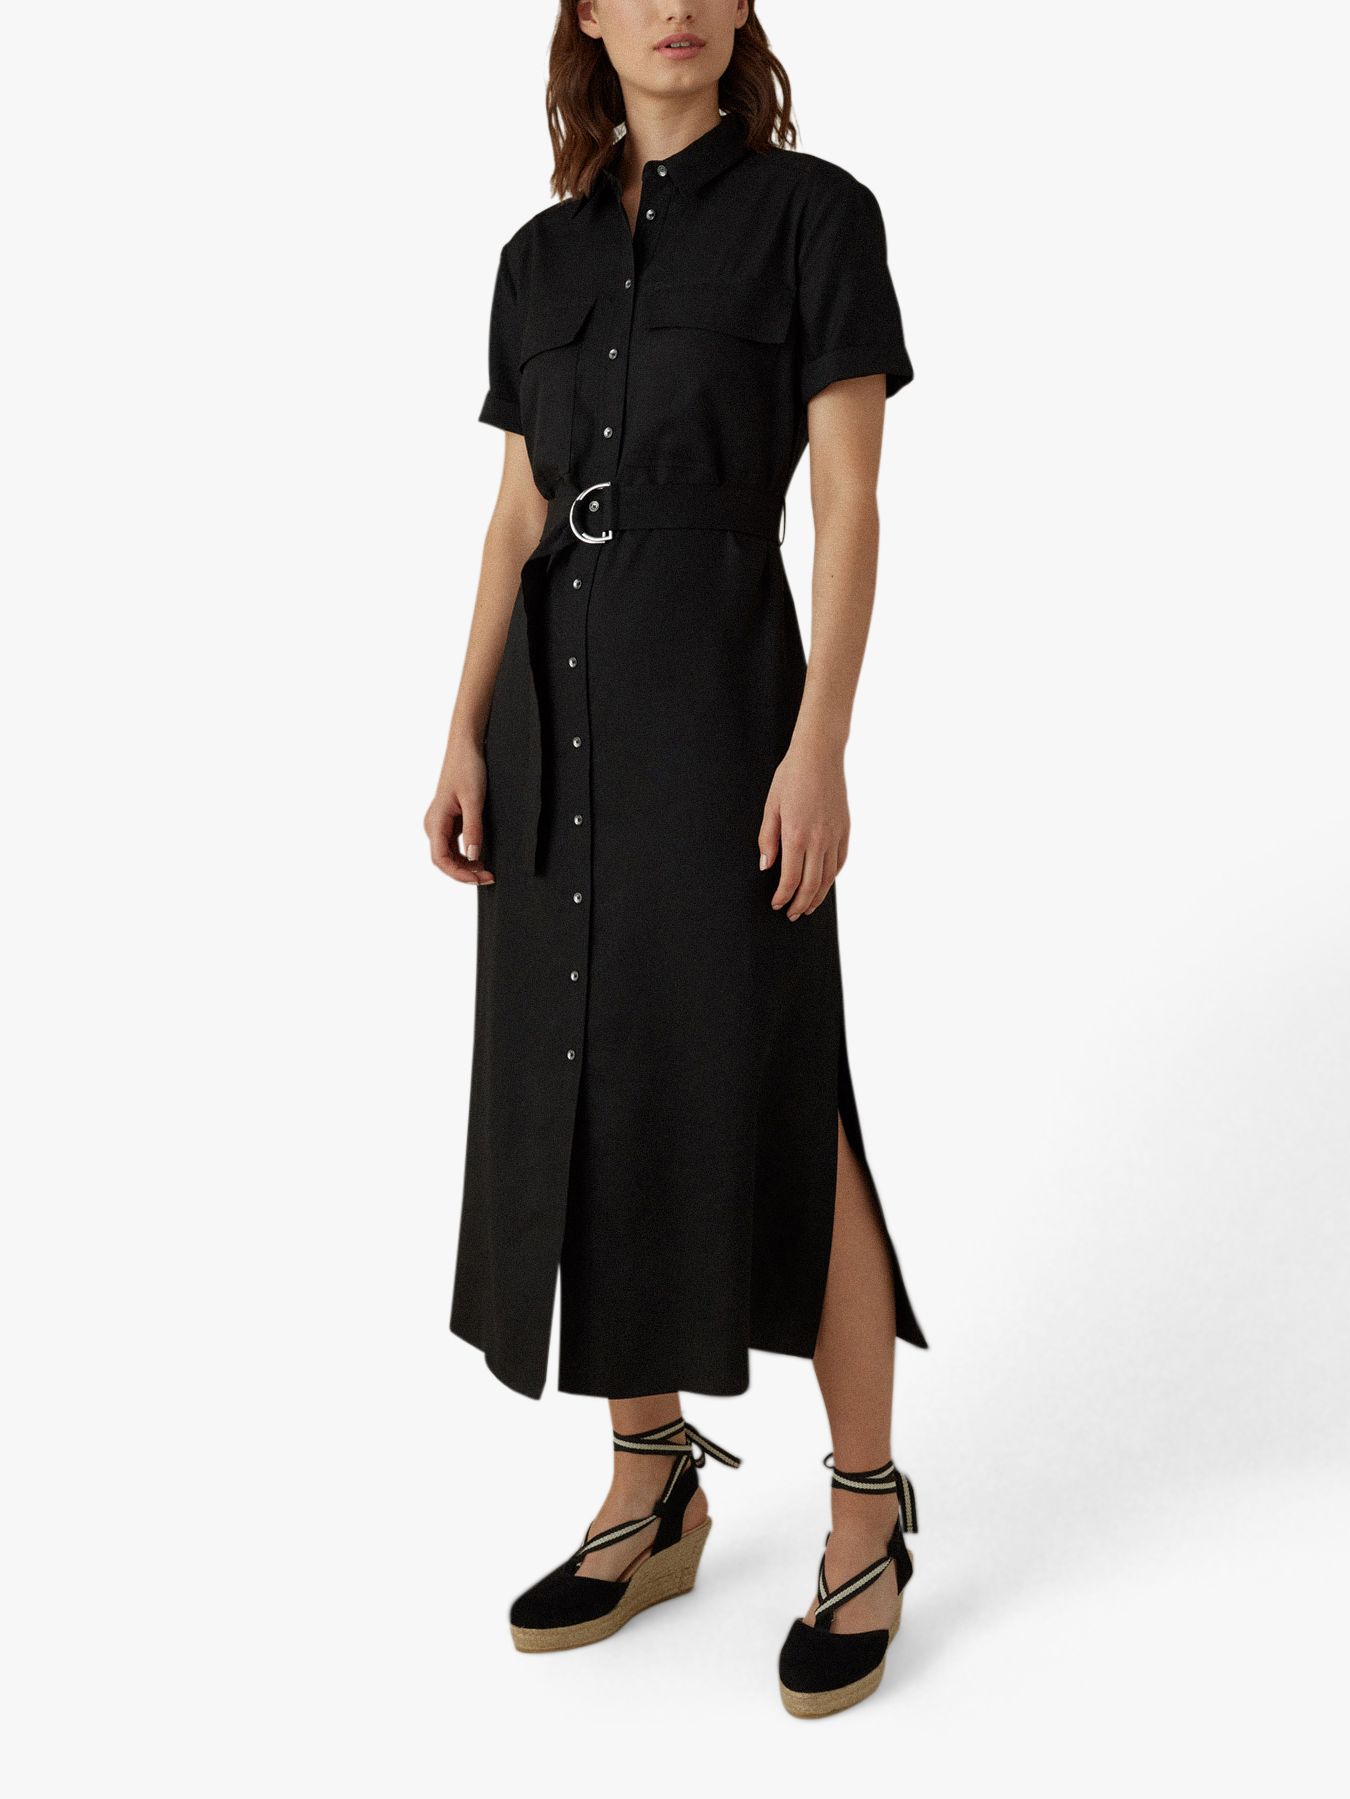 Karen Millen Utility Shirt Dress, Black at John Lewis & Partners